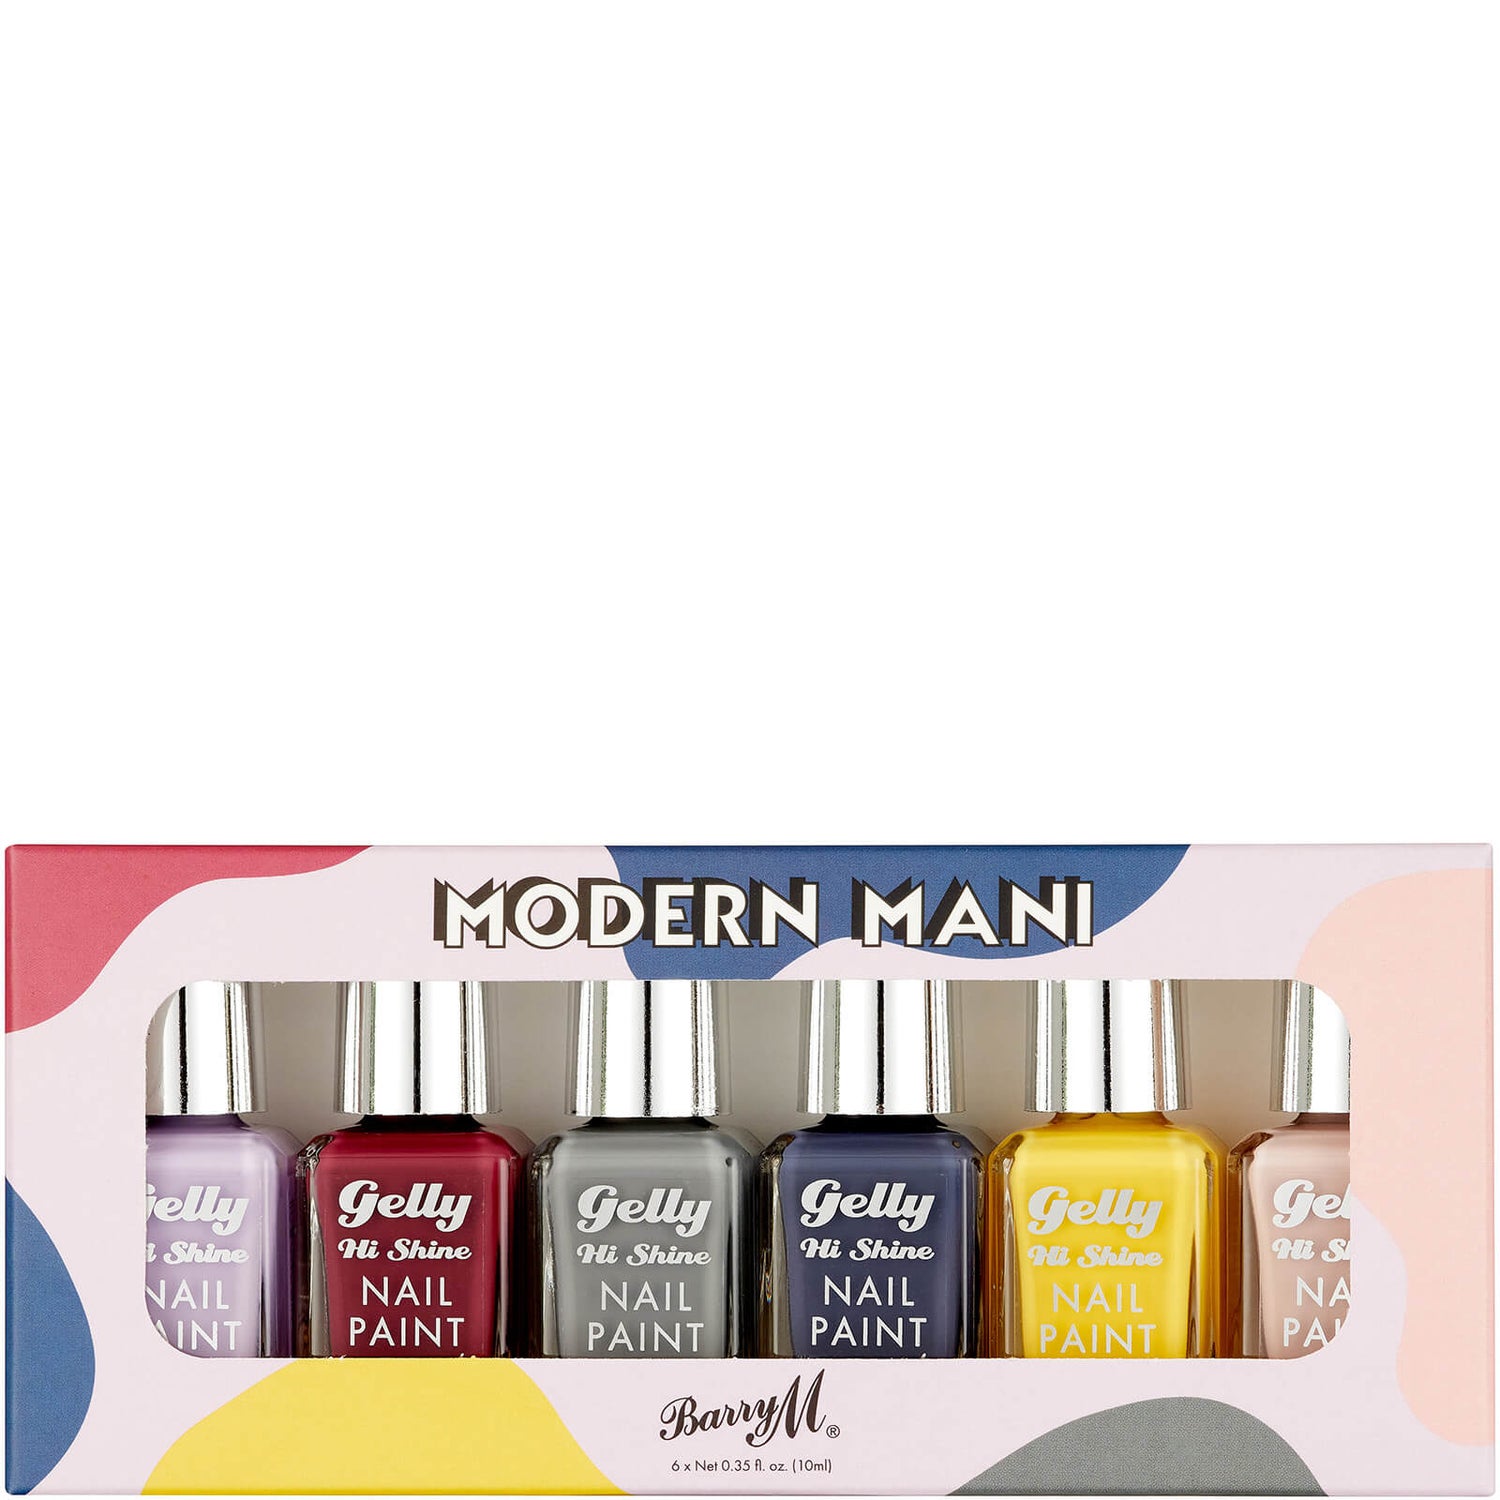 Barry M Cosmetics Nail Paint Gift Set - Modern Mani - LOOKFANTASTIC